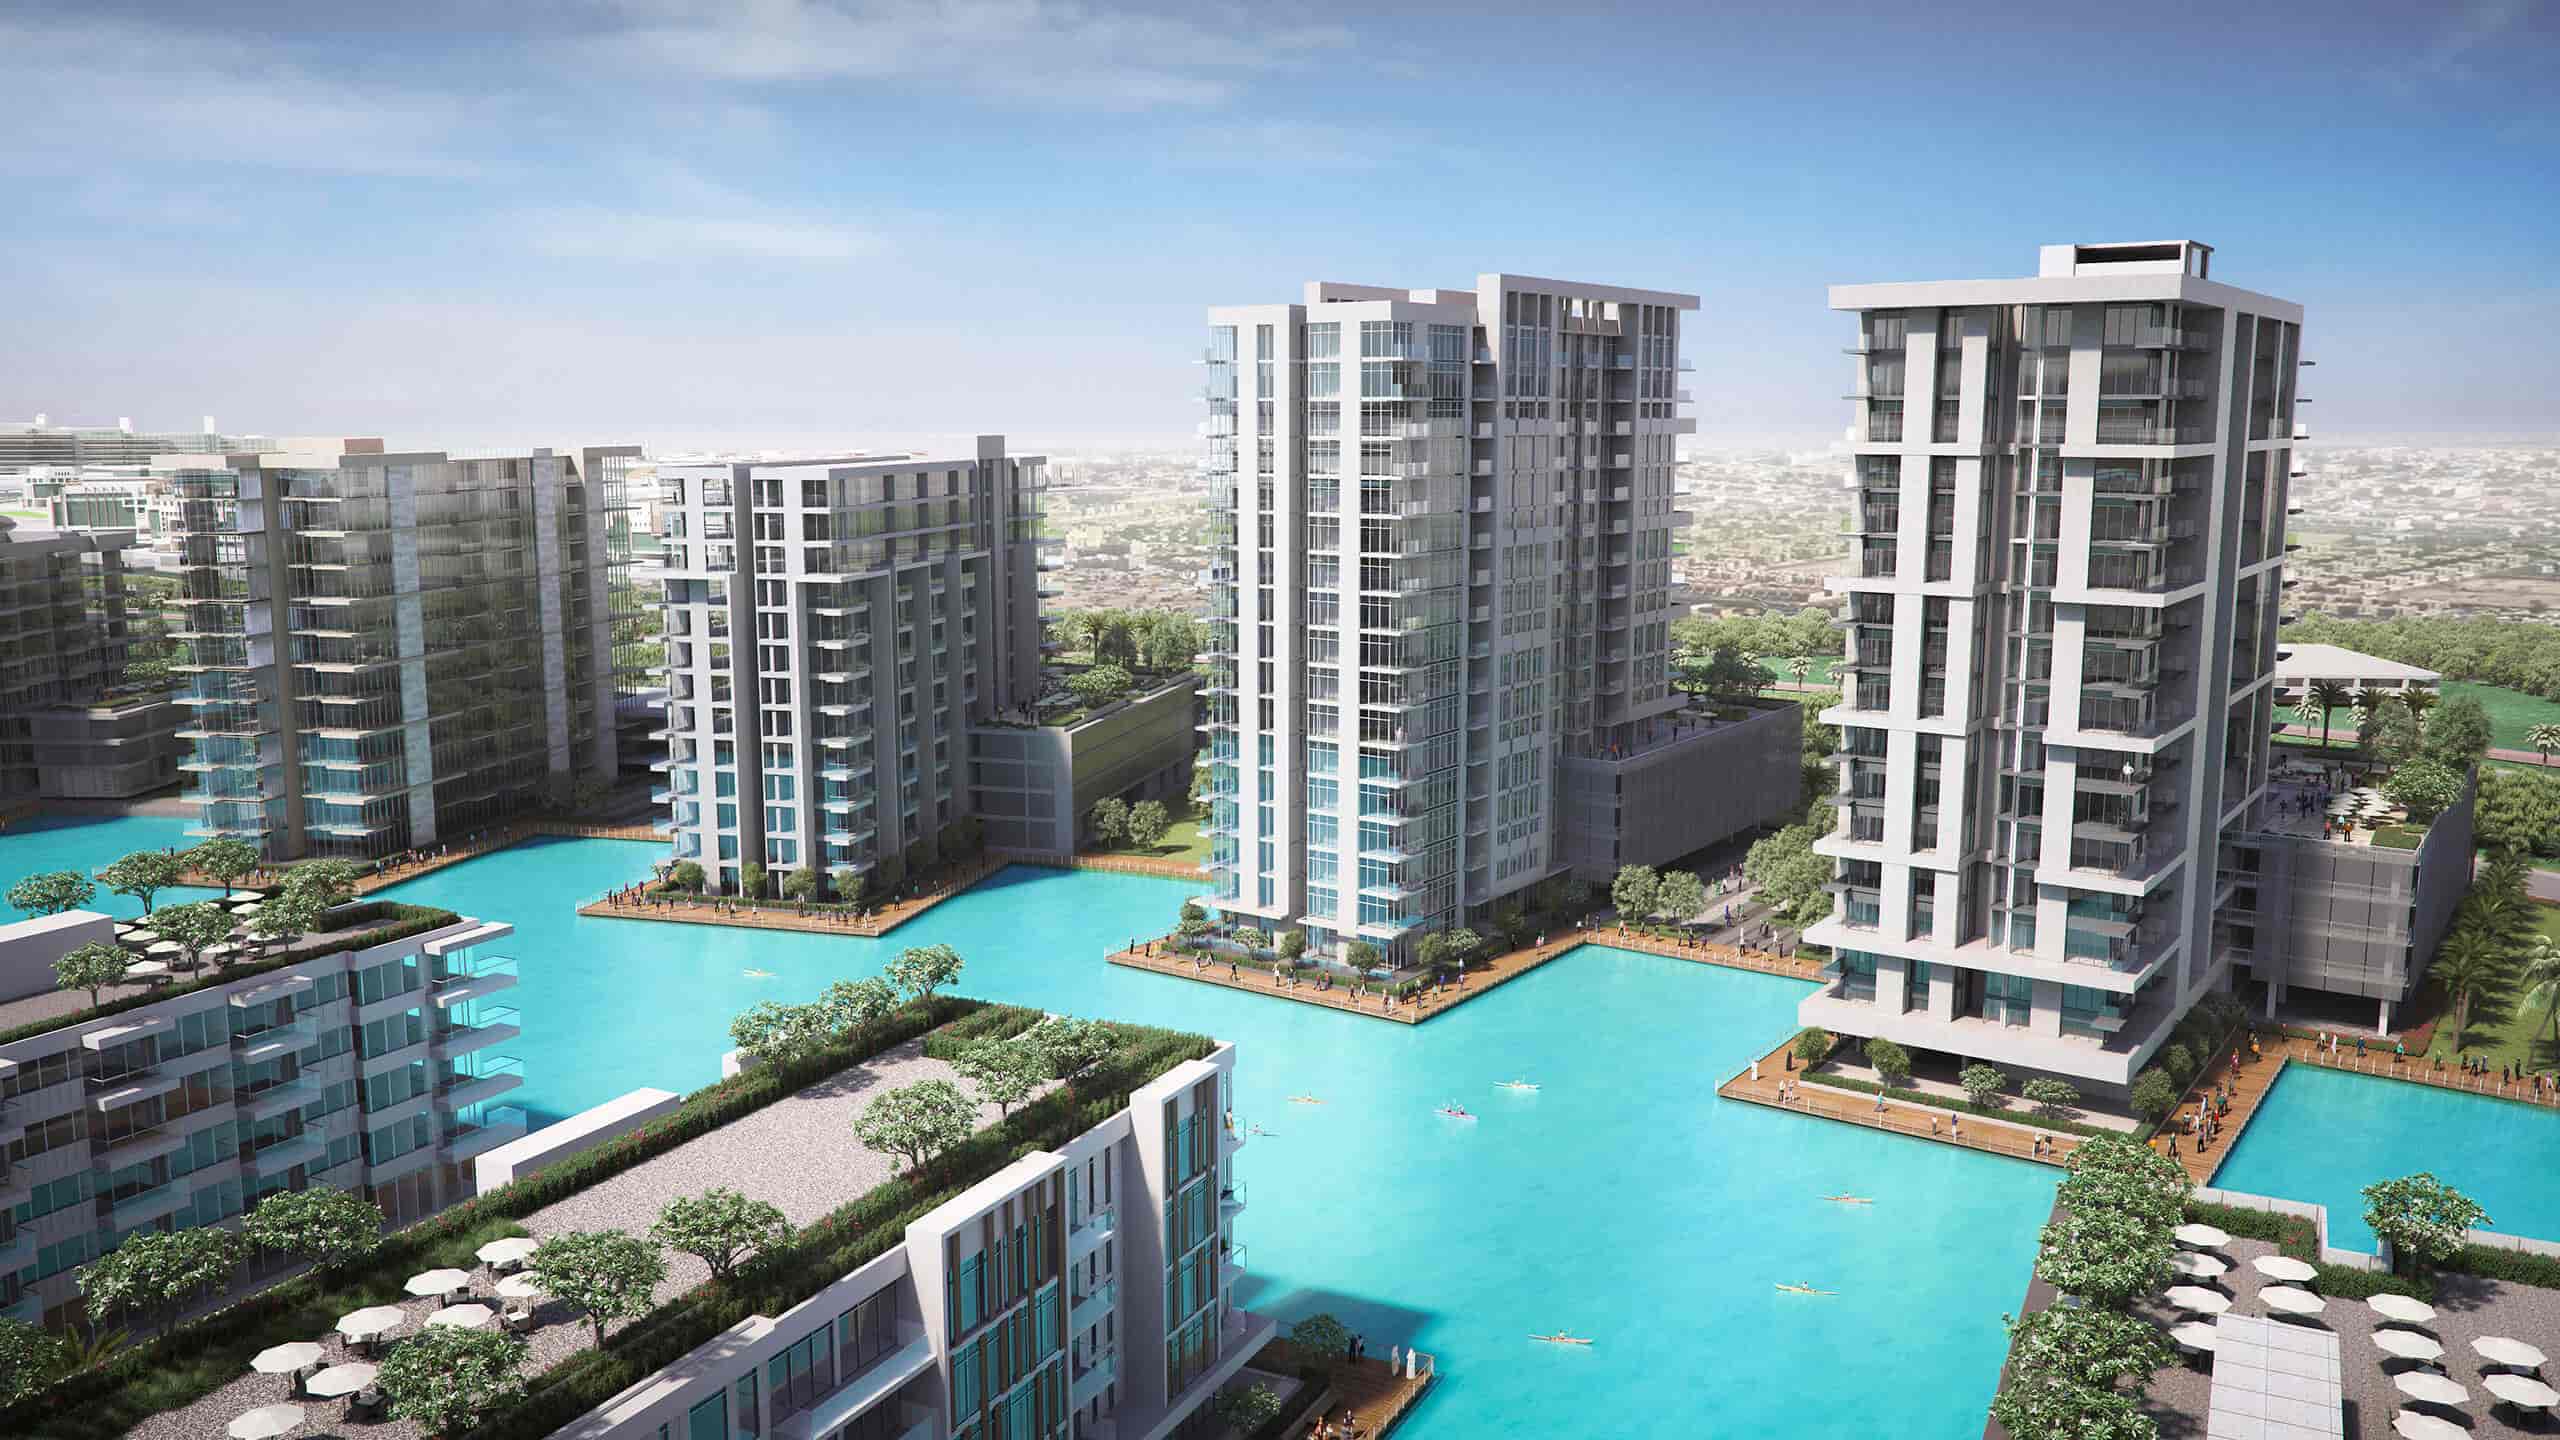 Properties for Sale in Mohammed Bin Rashid Al Maktoum (MBR) City, Dubai